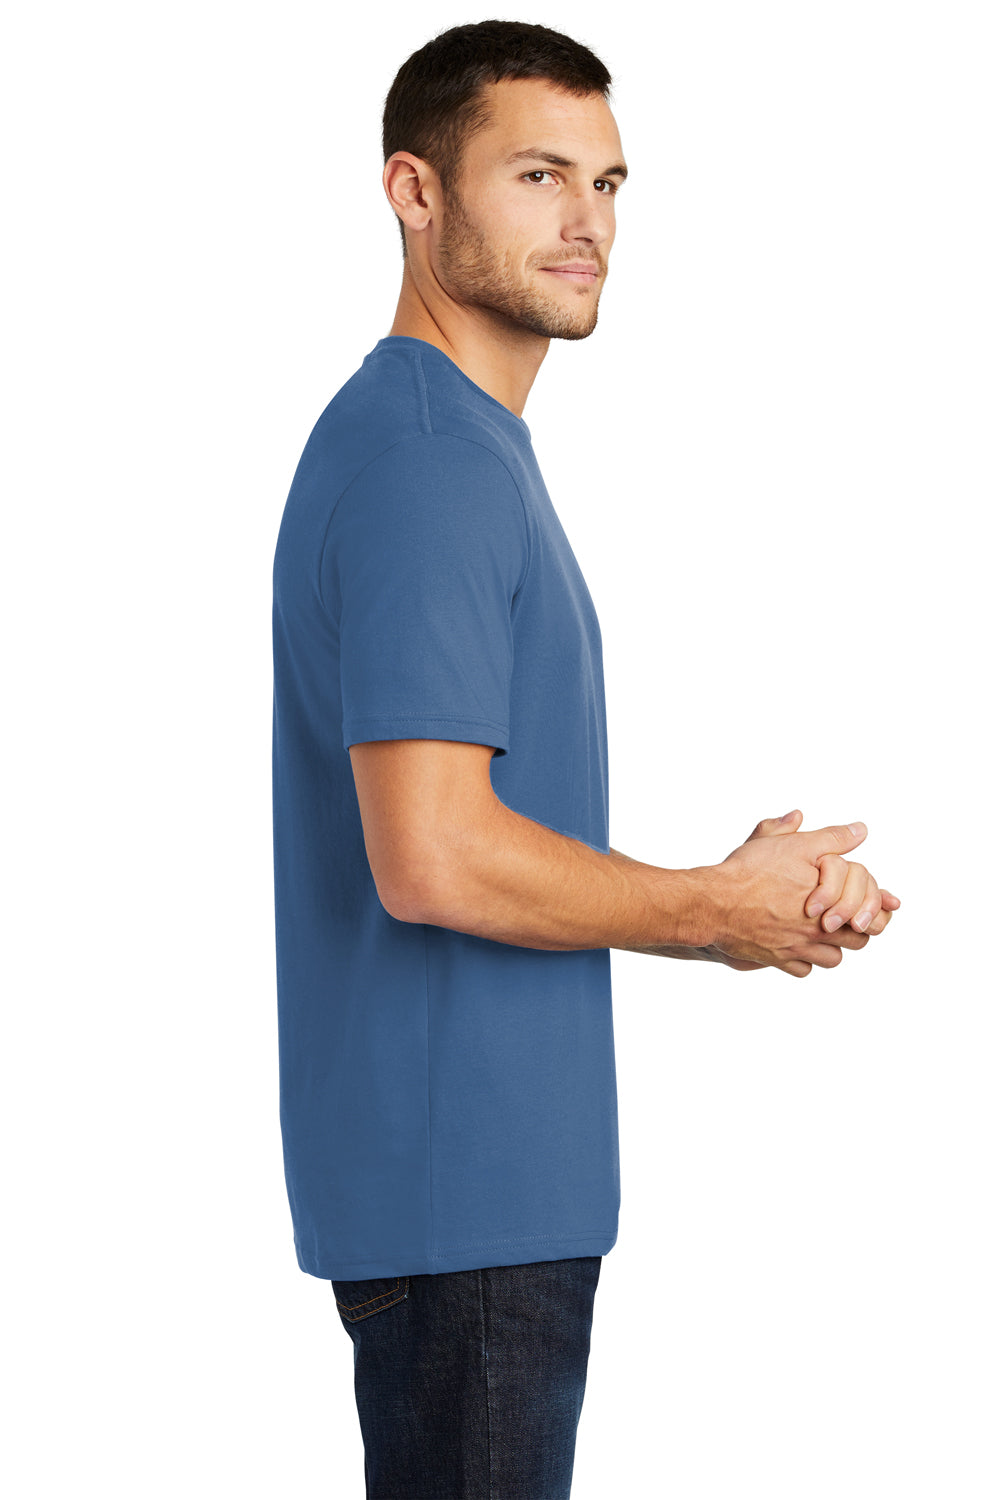 District DT104 Mens Perfect Weight Short Sleeve Crewneck T-Shirt Maritime Blue Side